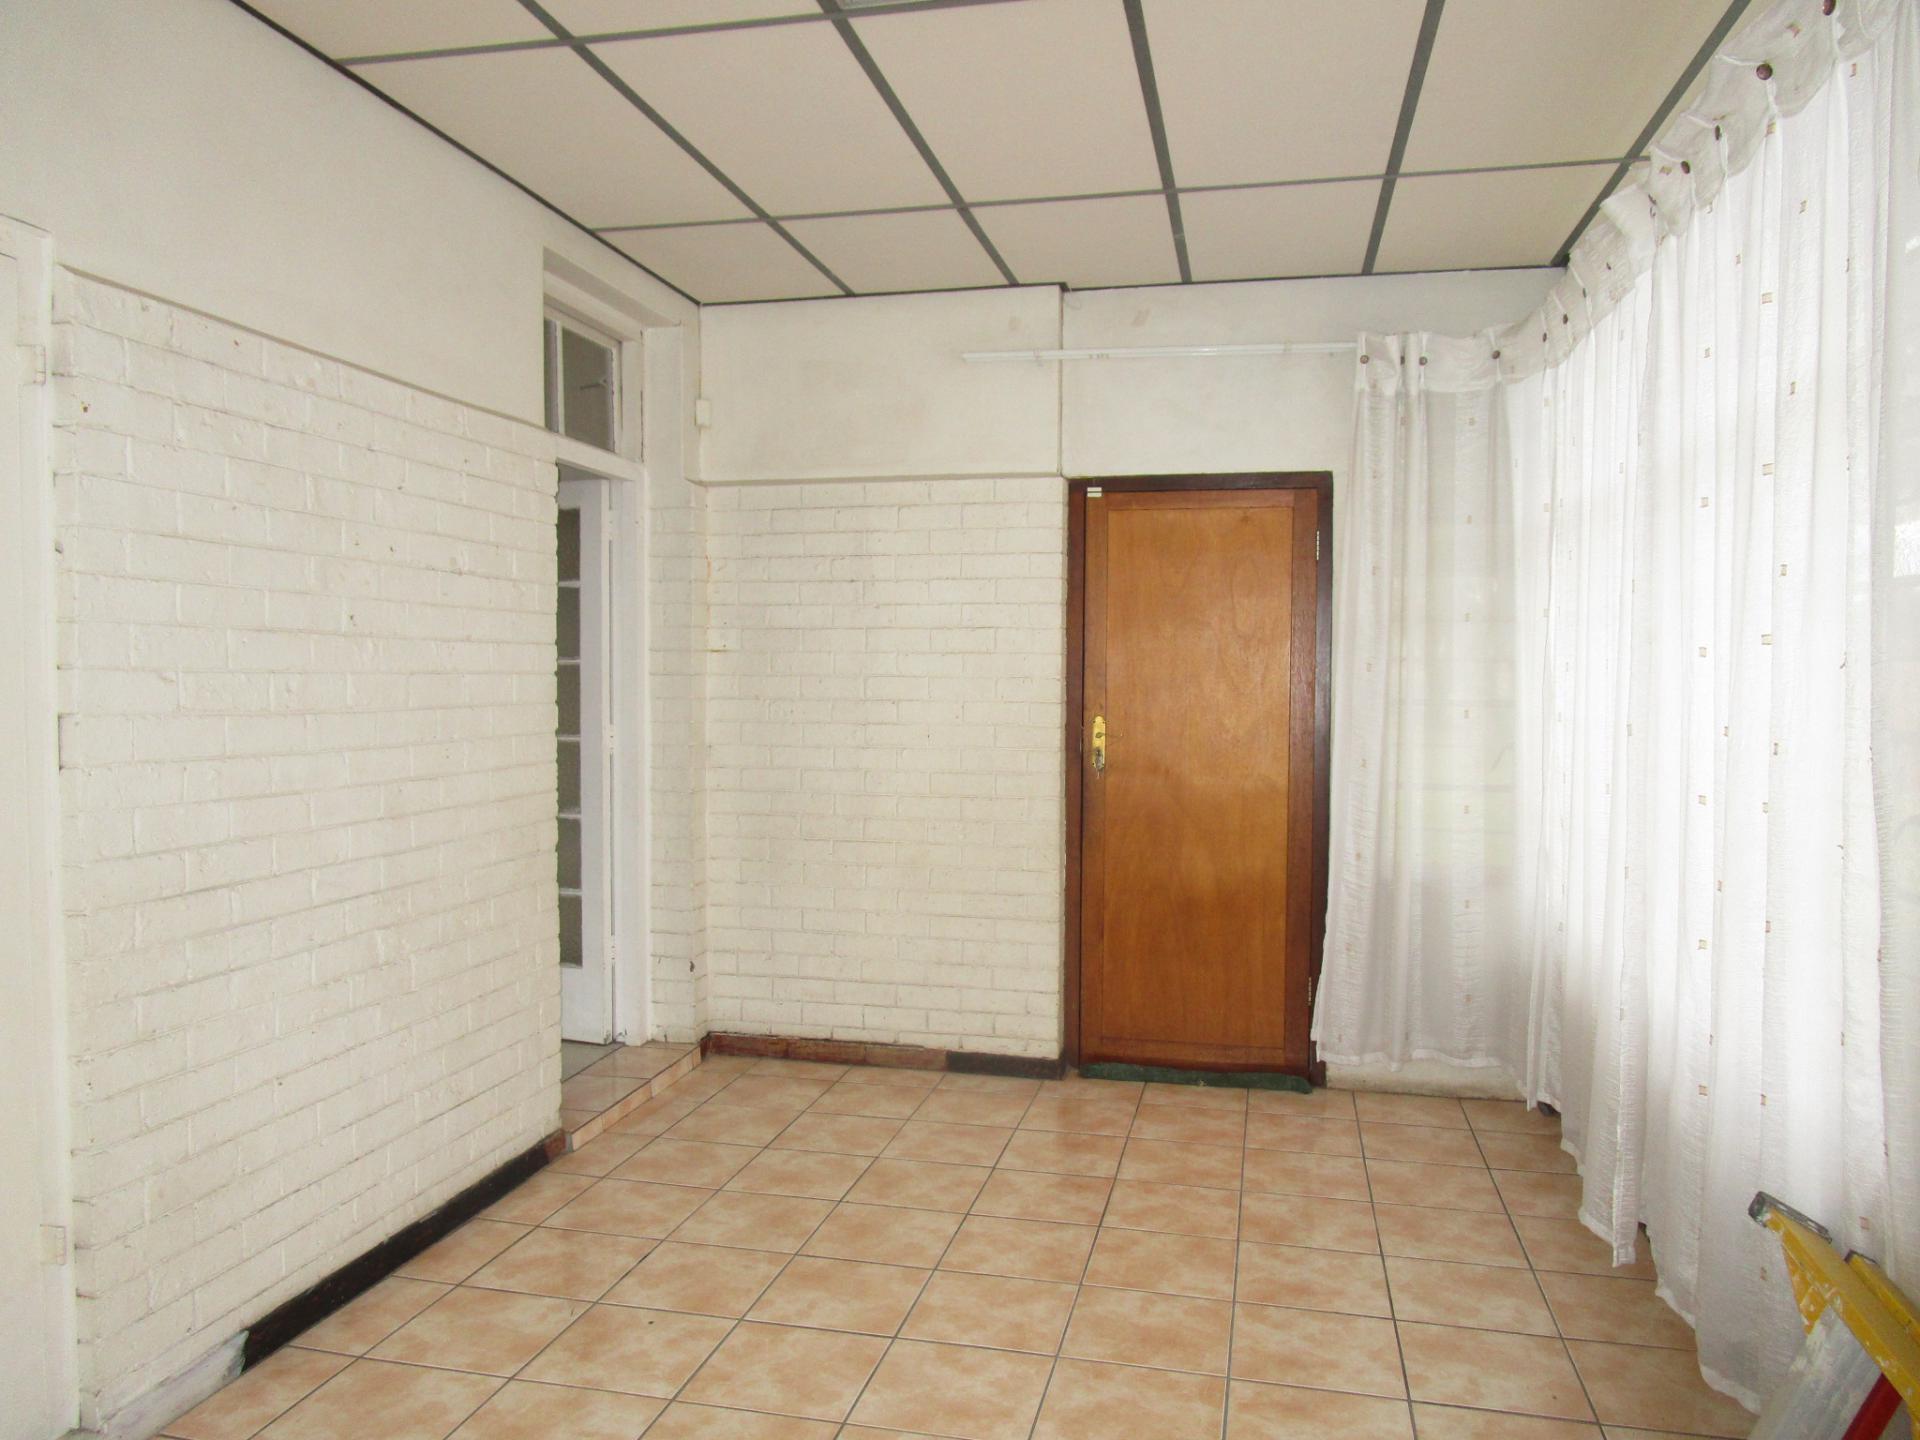 Dining Room - 19 square meters of property in Brakpan